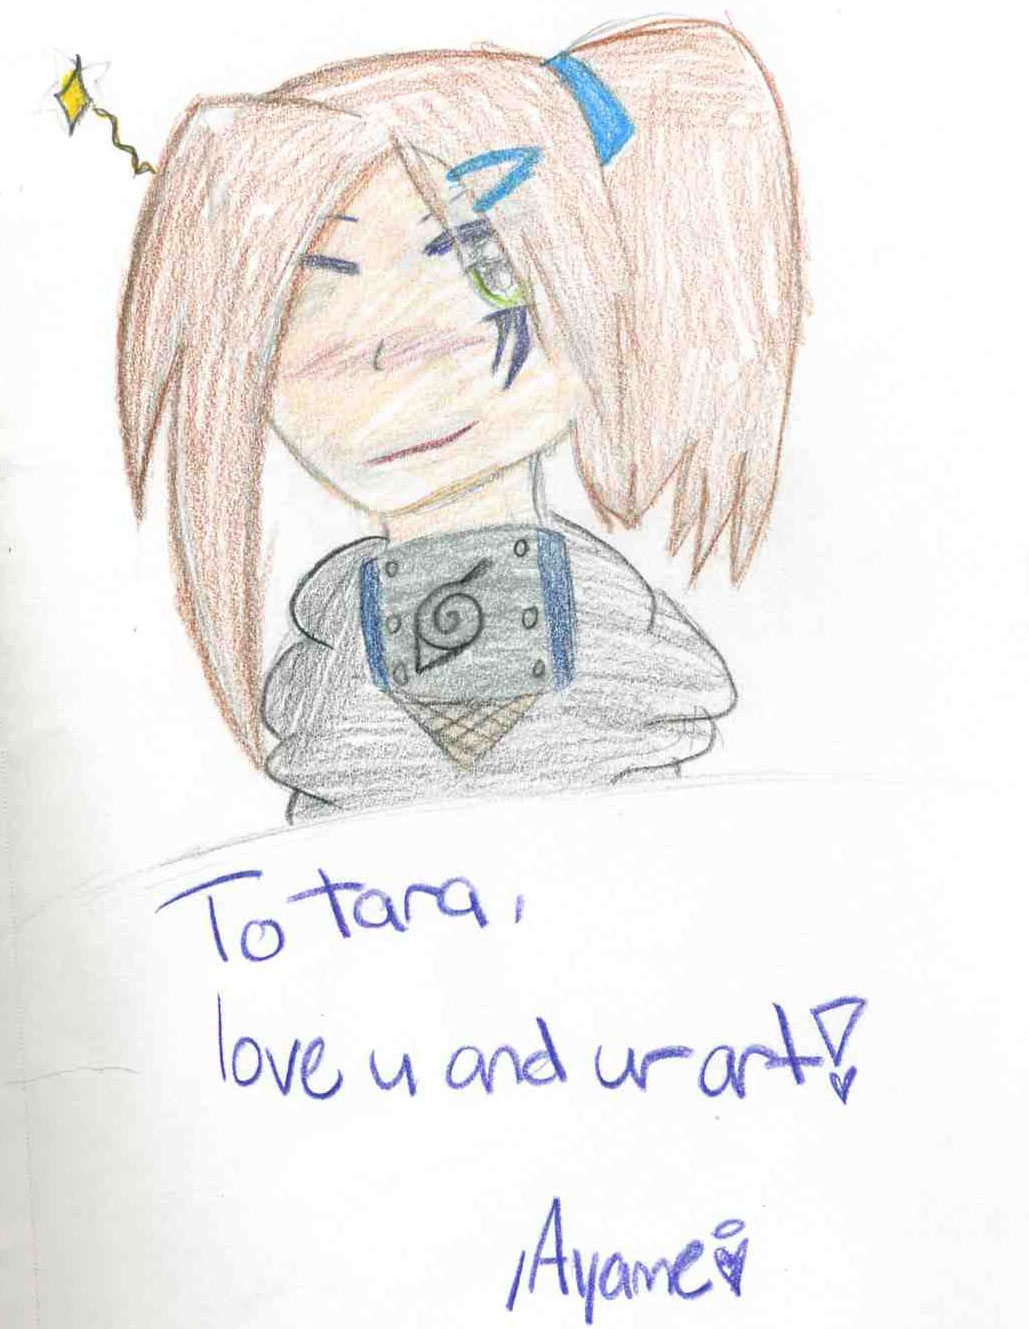 Tara - request for InvaderAvatarTitan13 by chiros_girl133